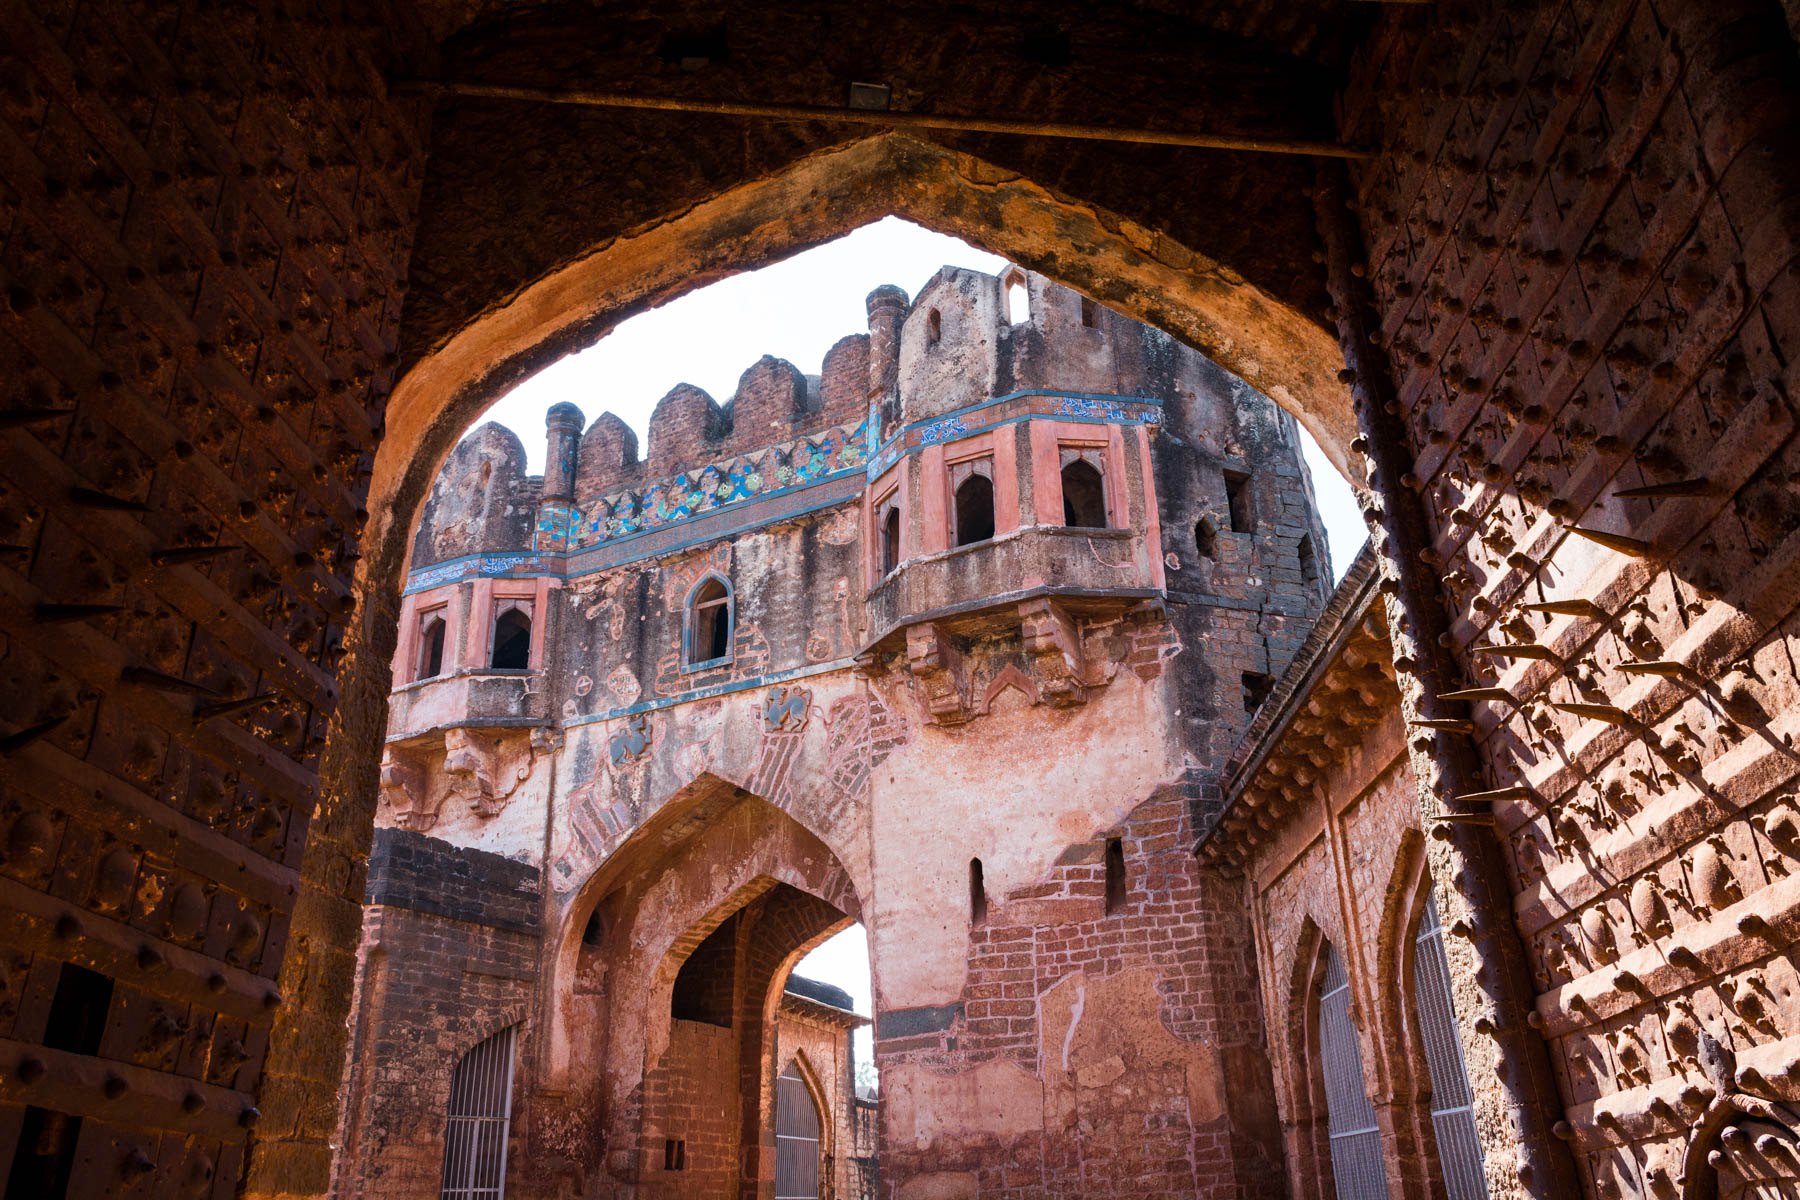 Off the beaten track places to visit in Karnataka, India - Bidar fort in Bidar, India - Lost With Purpose